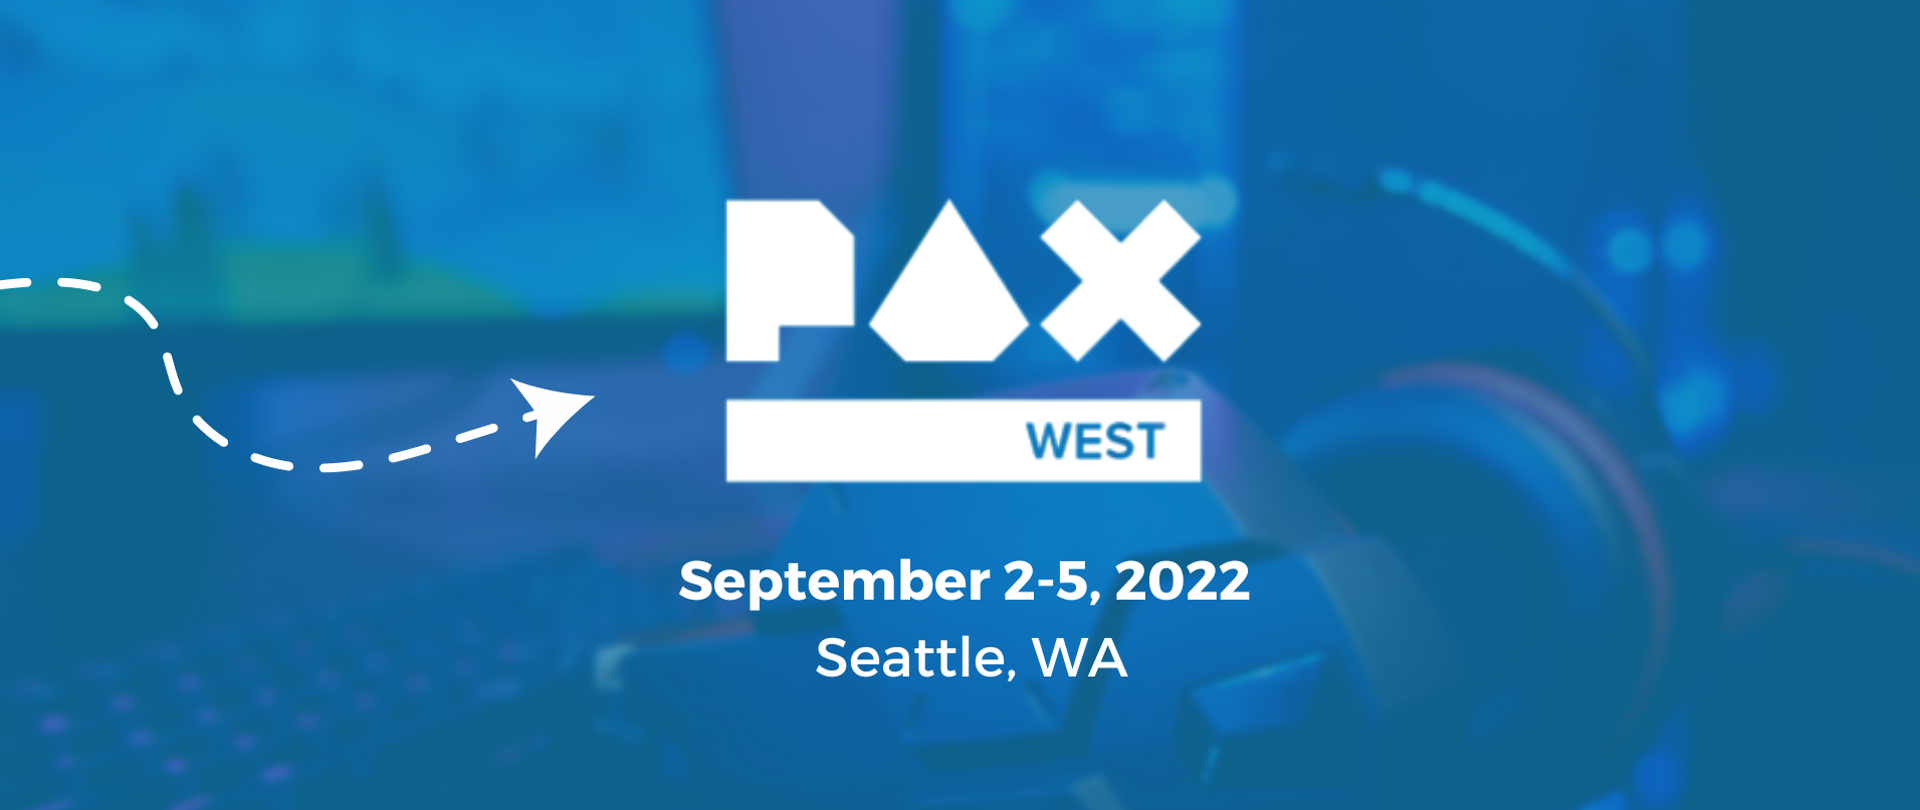 PAX West
September 2-5, 2022
Seattle, WA